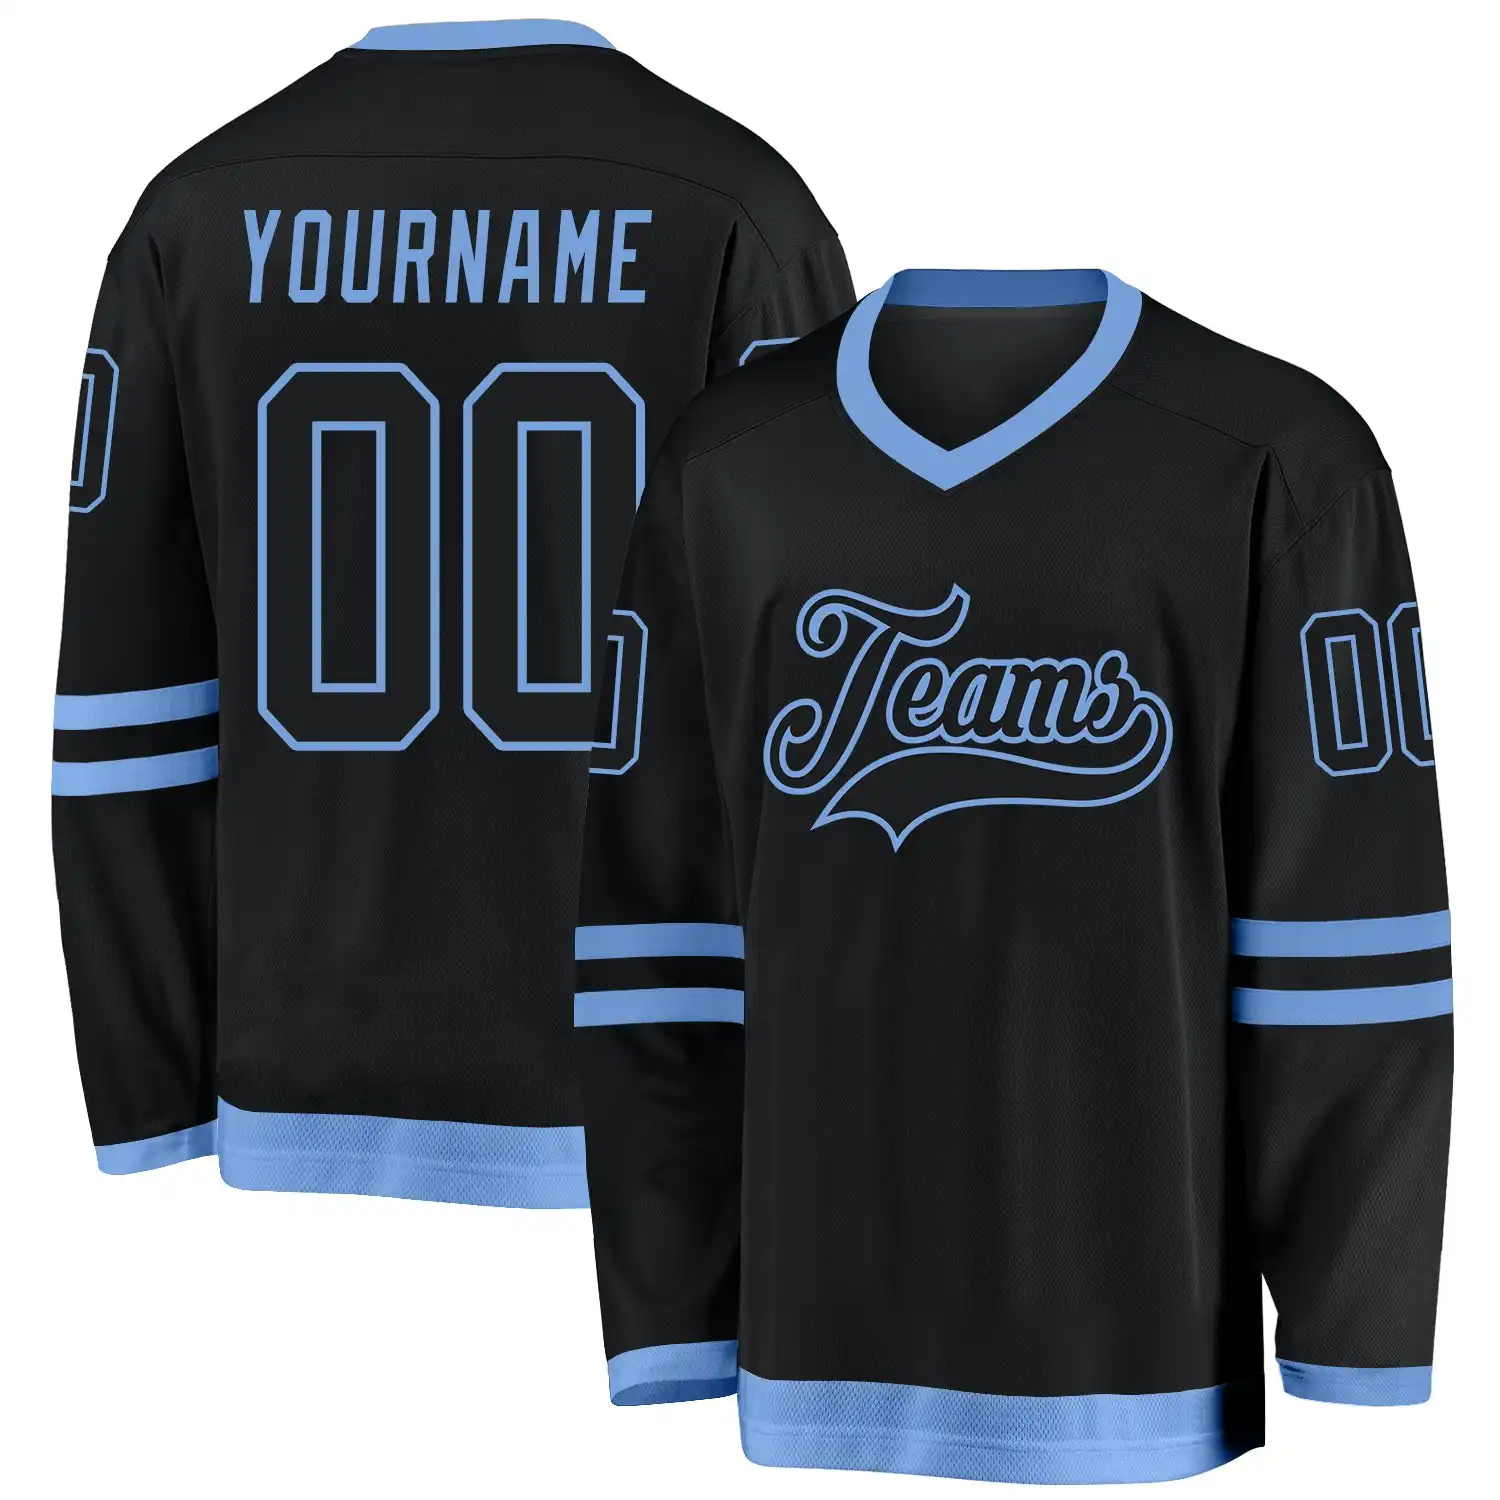 Stitched And Print Black Black-light Blue Hockey Jersey Custom